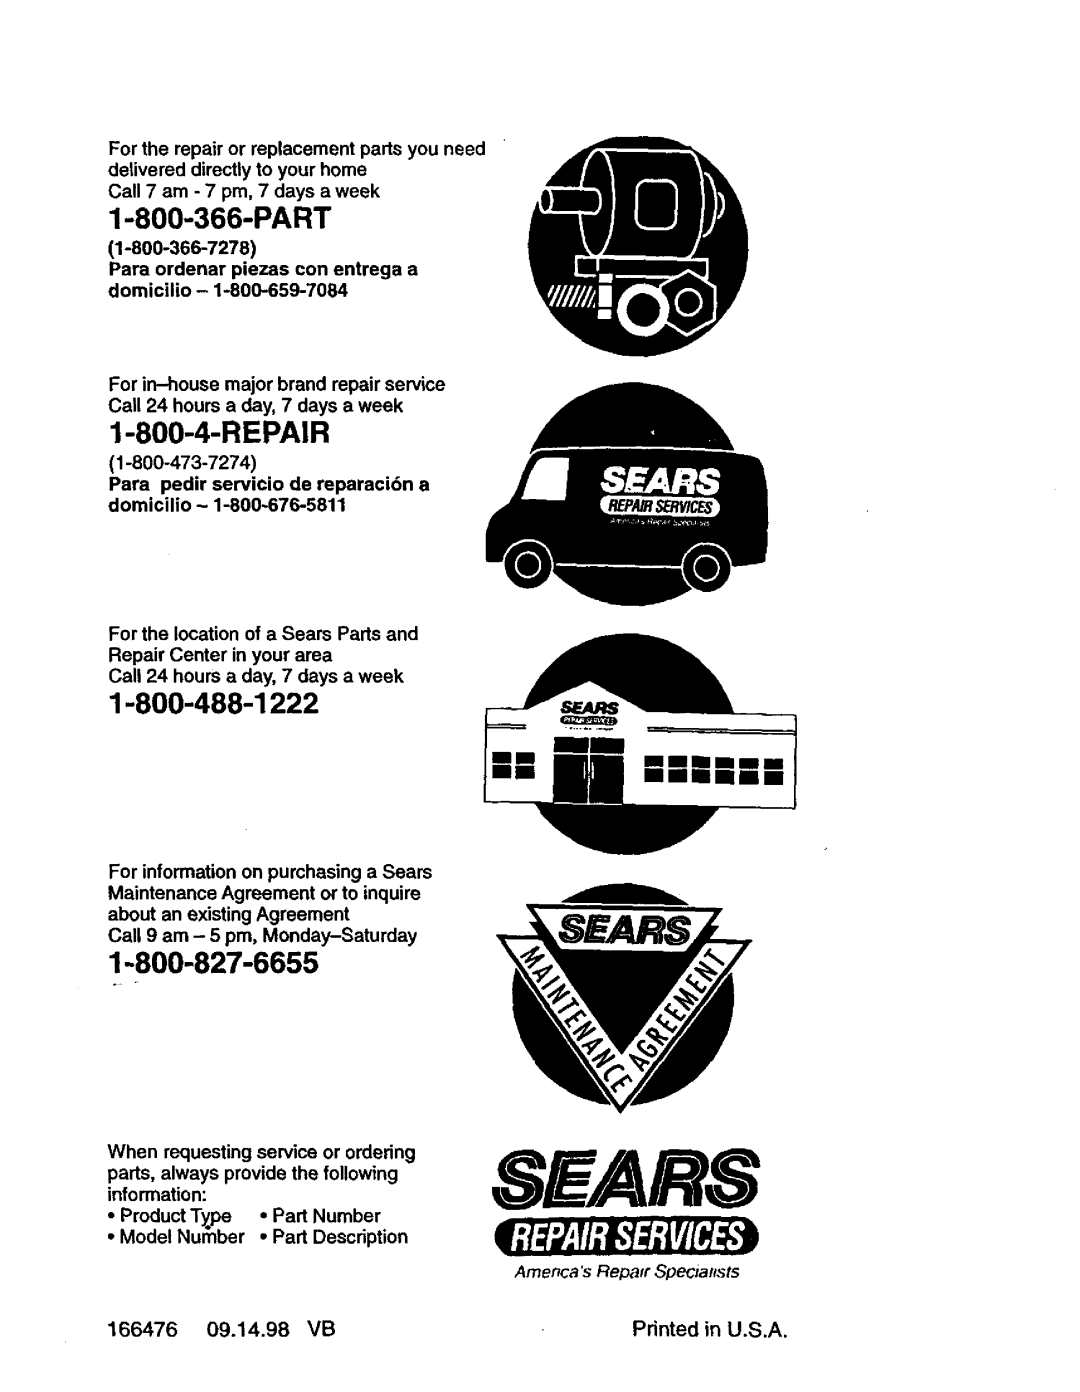 Craftsman 917.387203 owner manual Part, Repair, Call7 am - 7 pm,7 daysa week, Sears, mmmmmm, Amencas Repazr Speciatzsts 